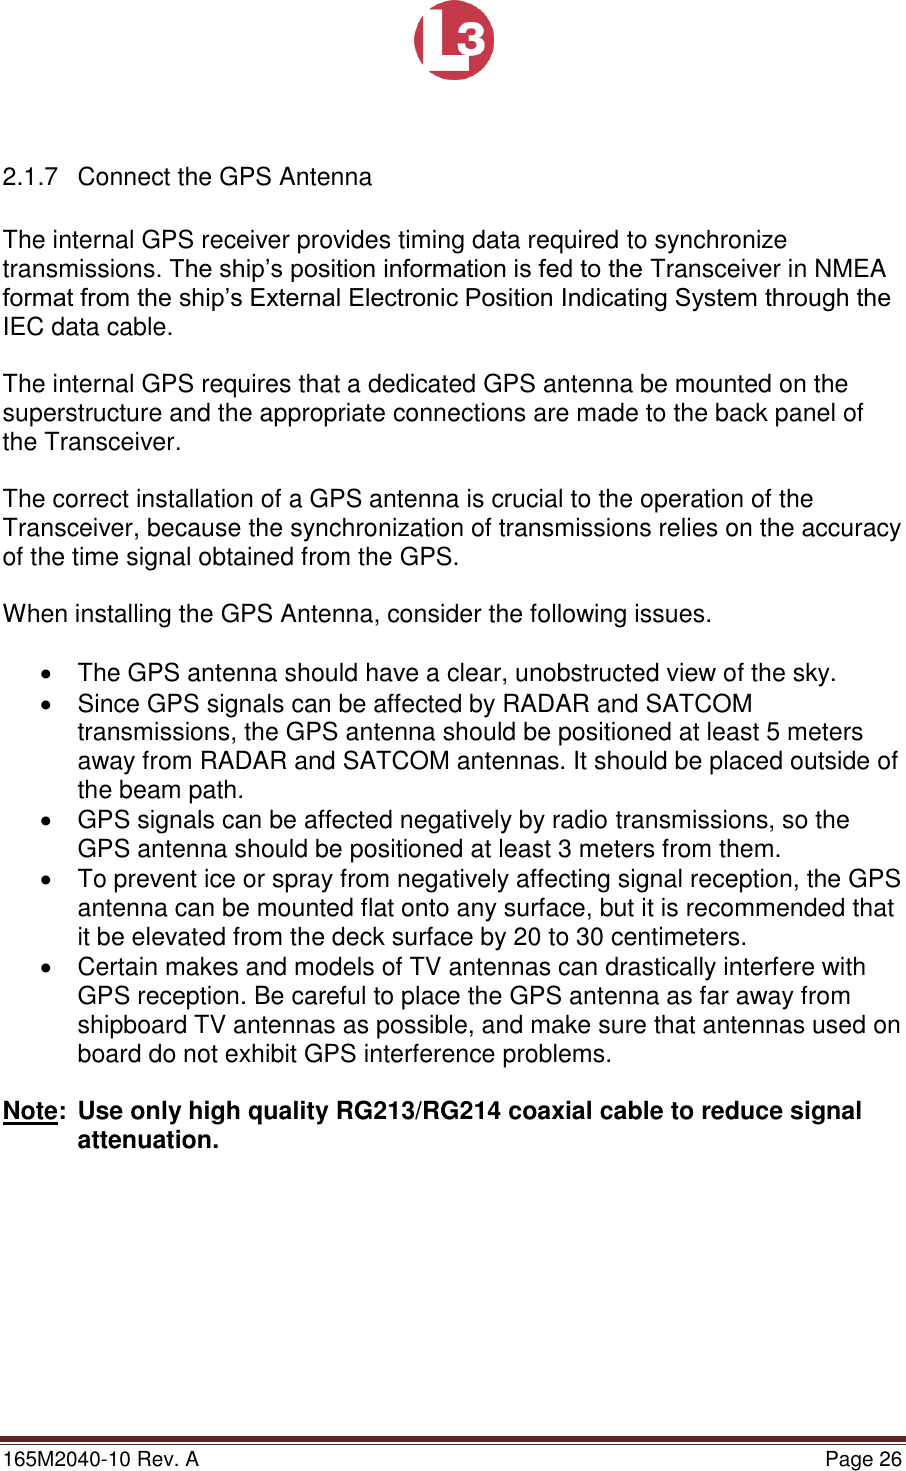 Page 26 of L3 Technologies AISA6 Shipboard Mobile AIS User Manual Memory Verification Procedure